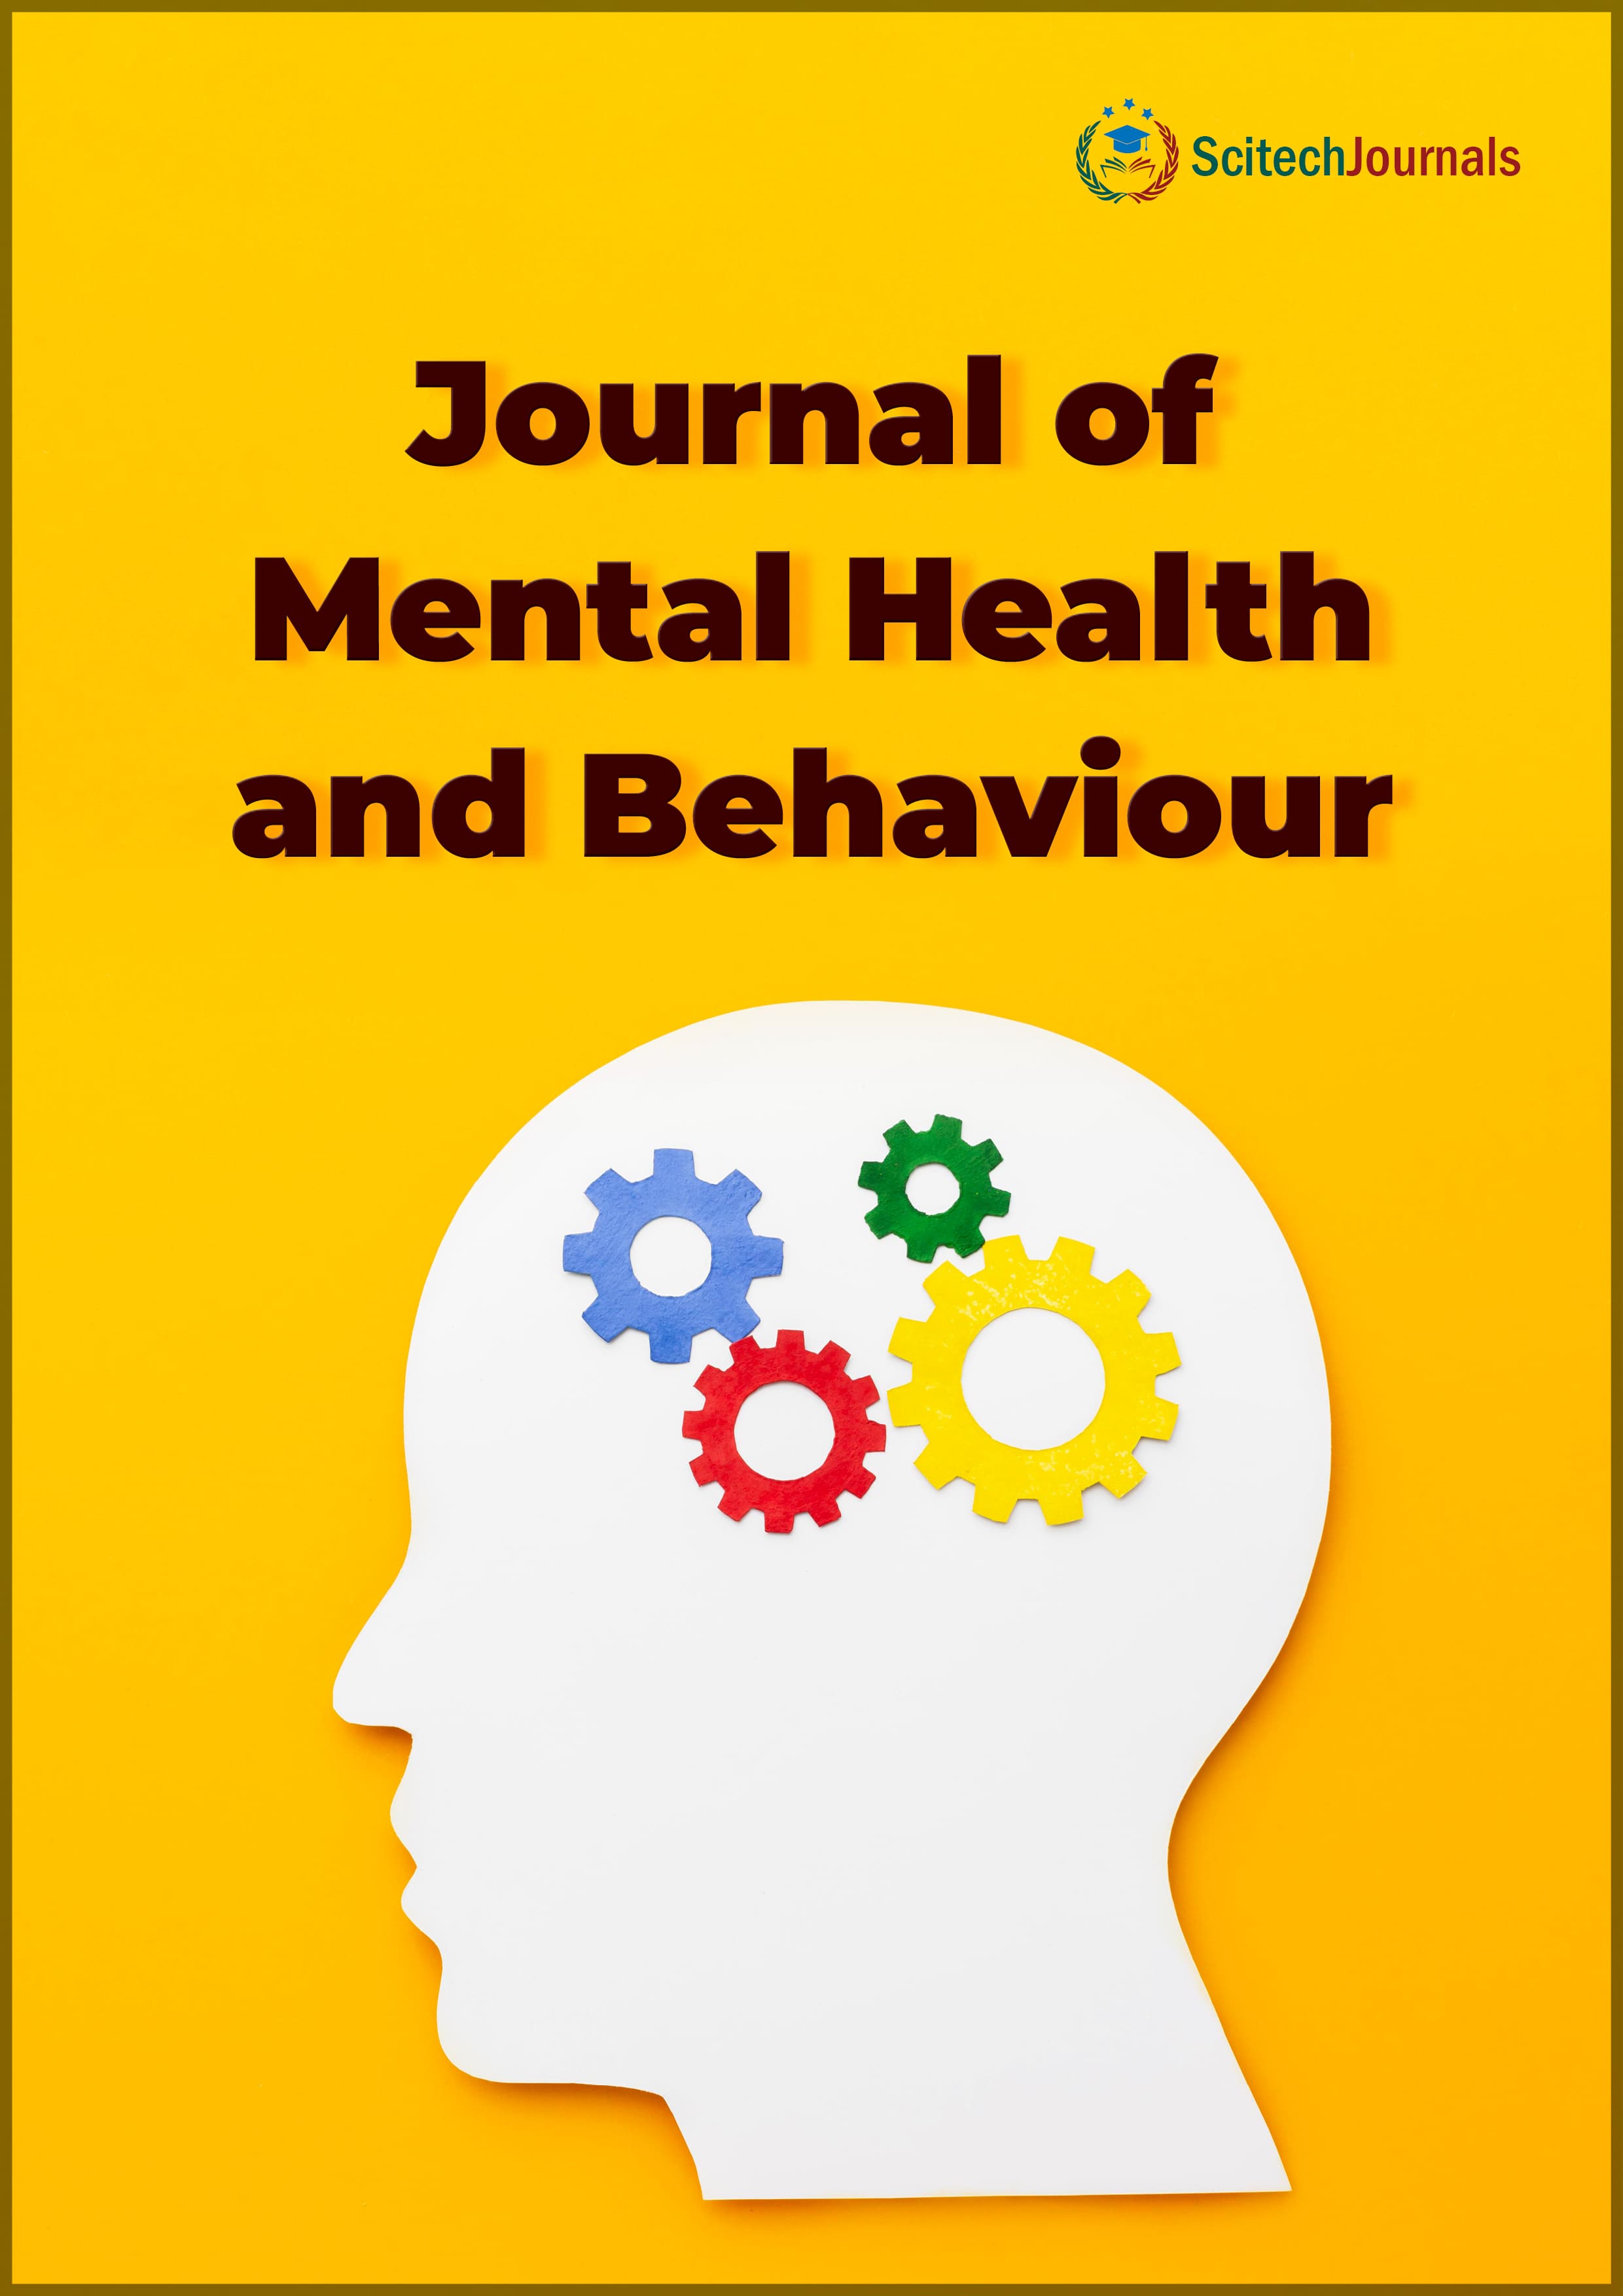 Journal of Mental Health and Behavior